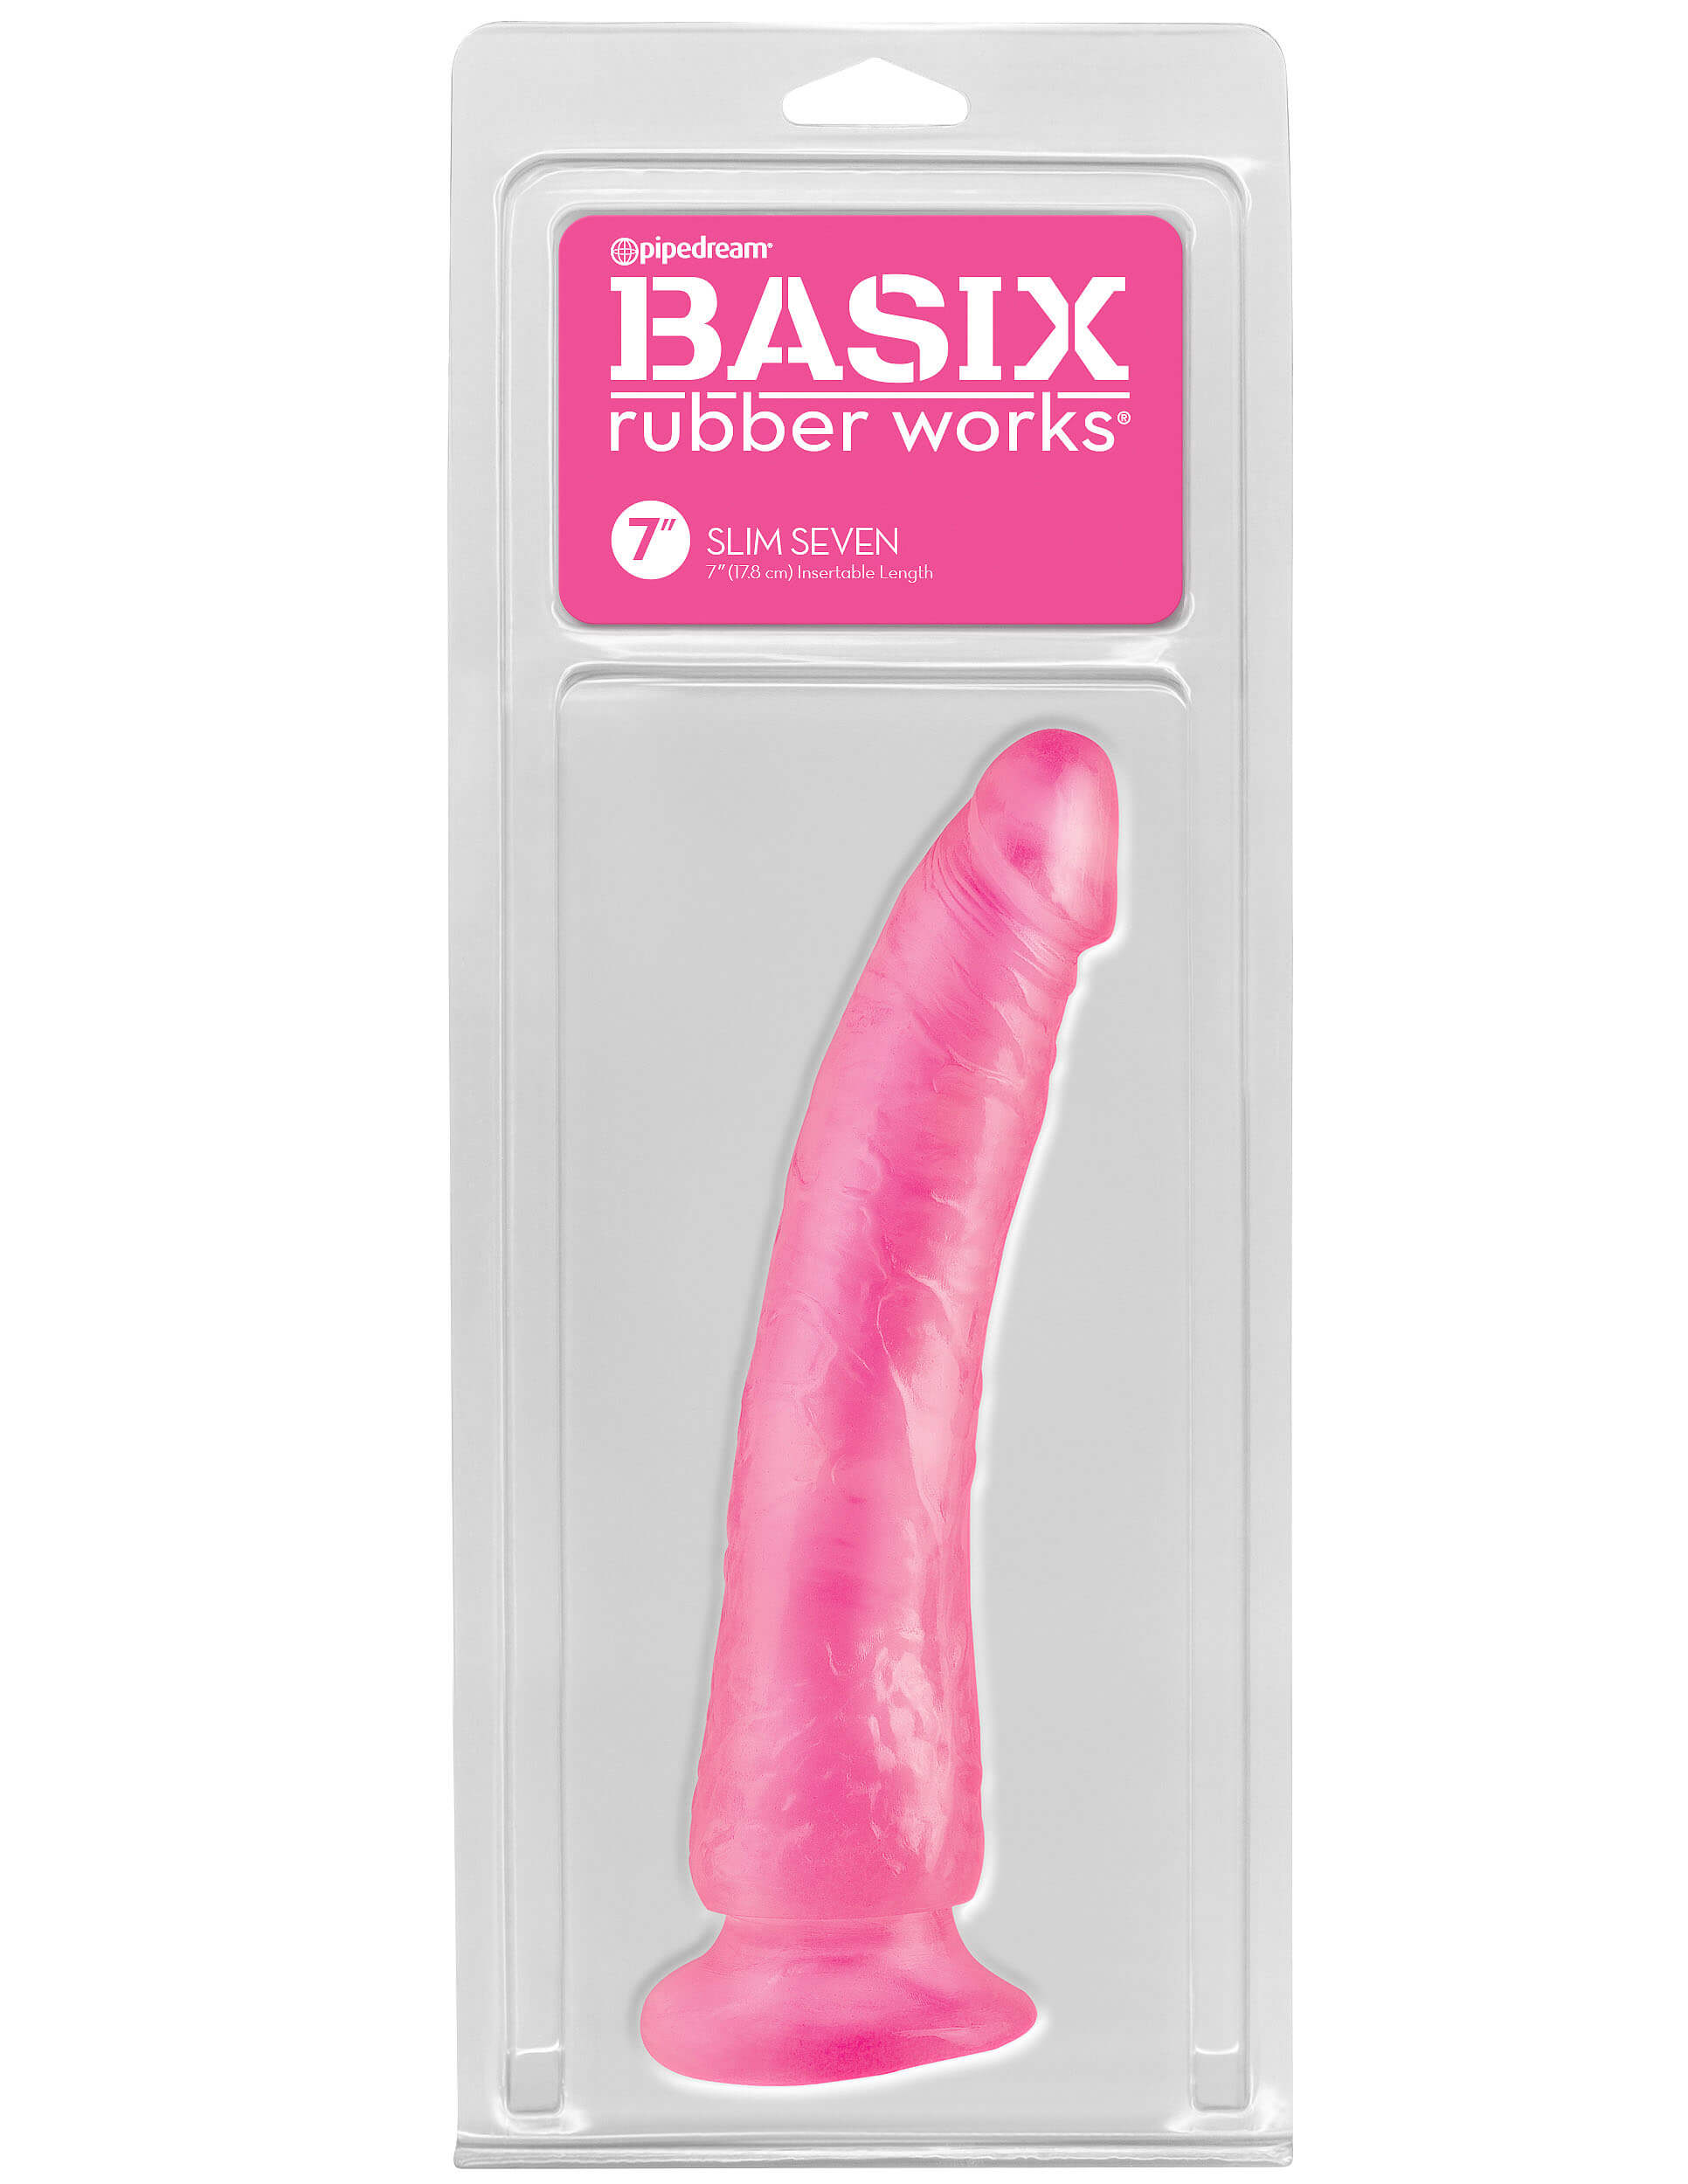 Basix Rubber Works Slim 7 pink